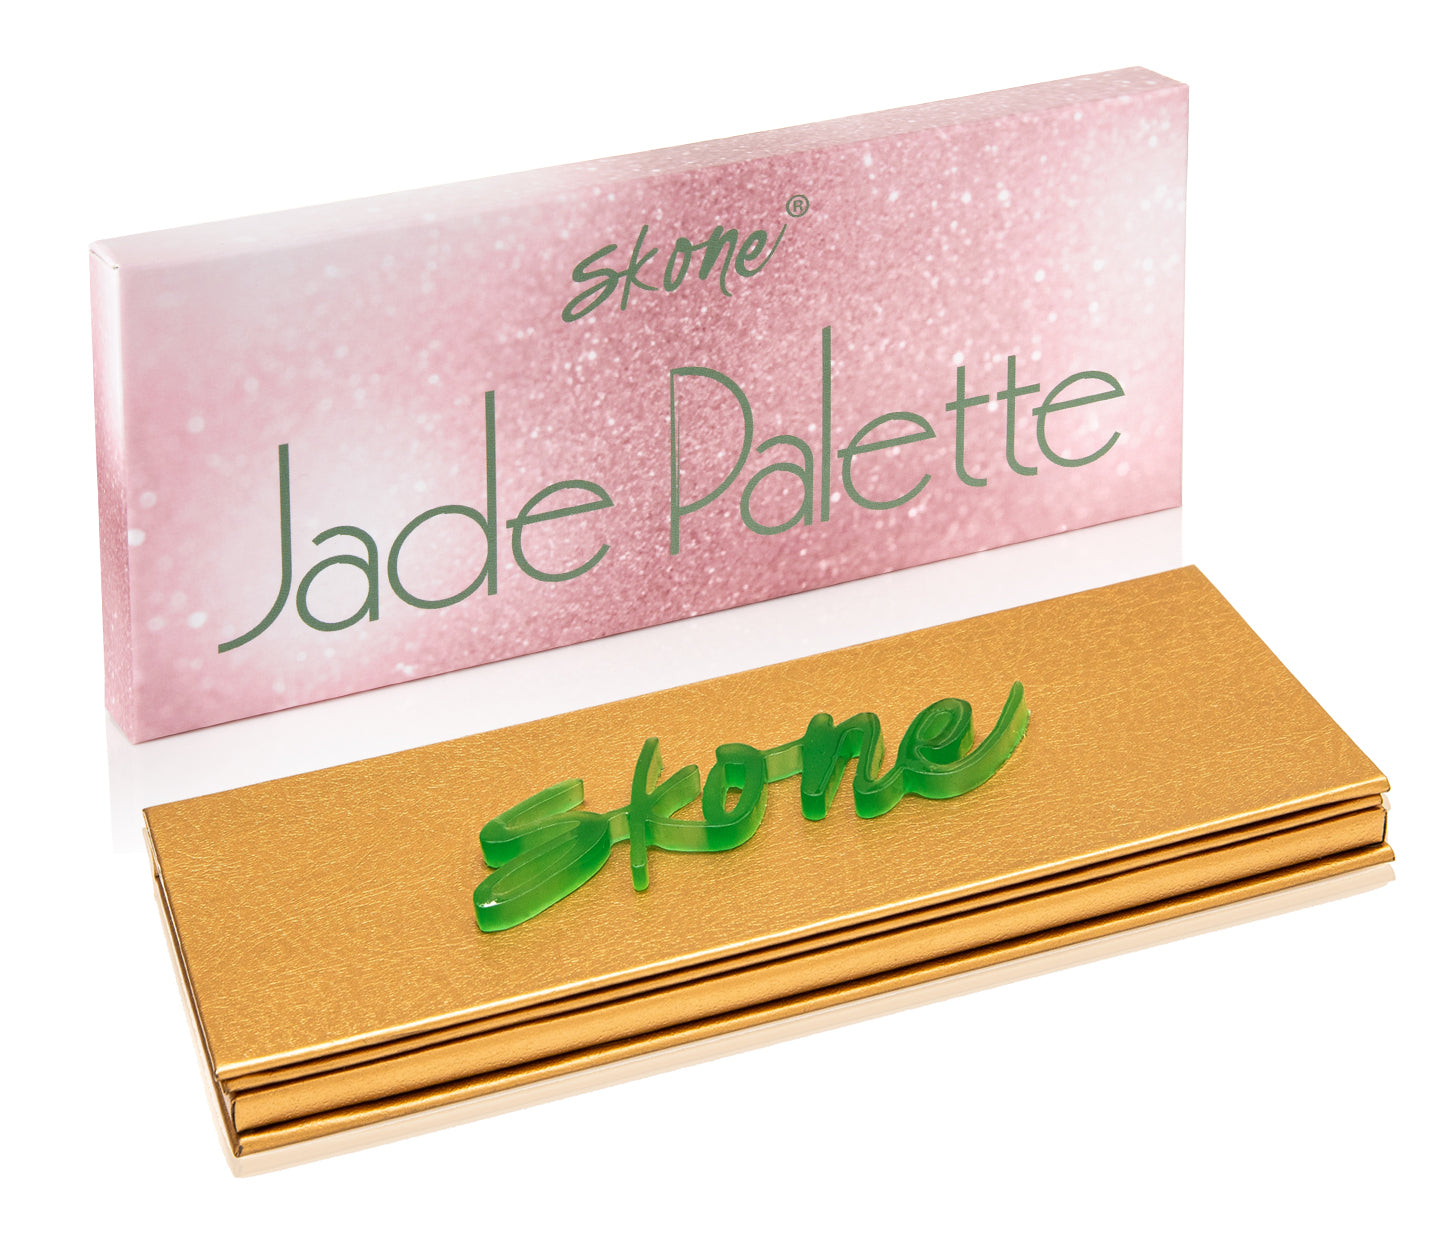 Products Skone Cosmetics Jade Palette™ smokey eye makeup